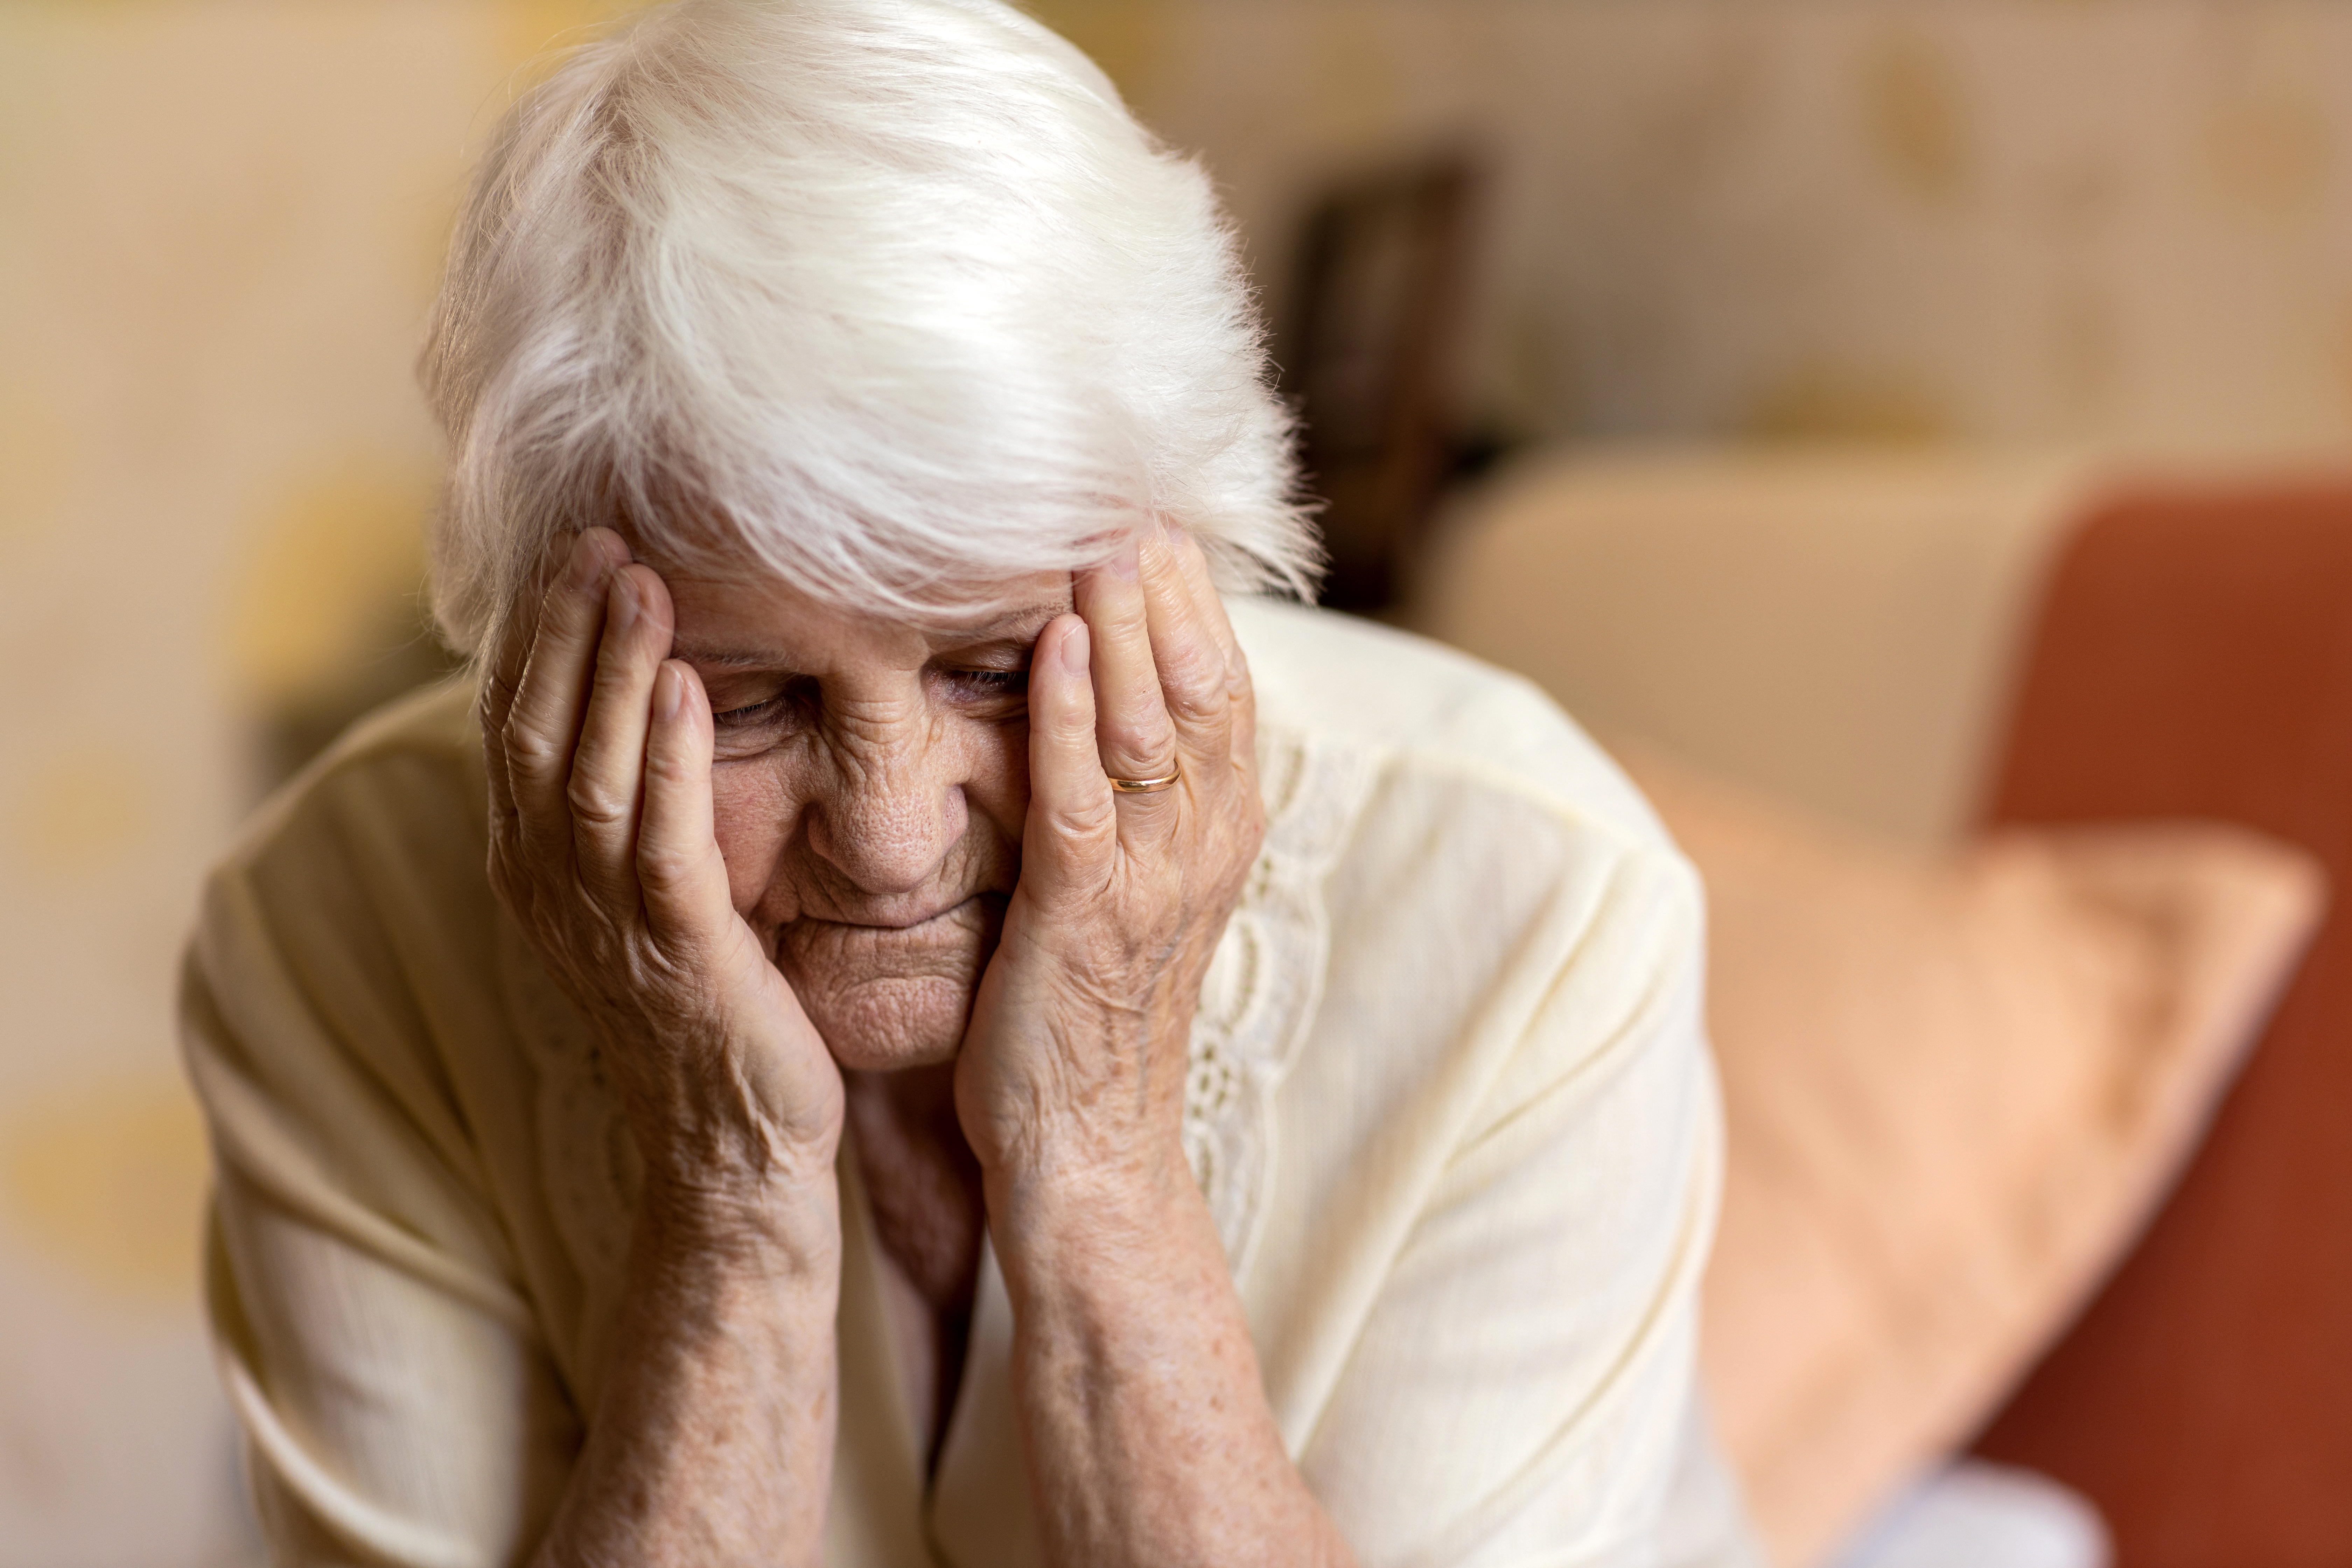 A depressed older woman | Source: Shutterstock